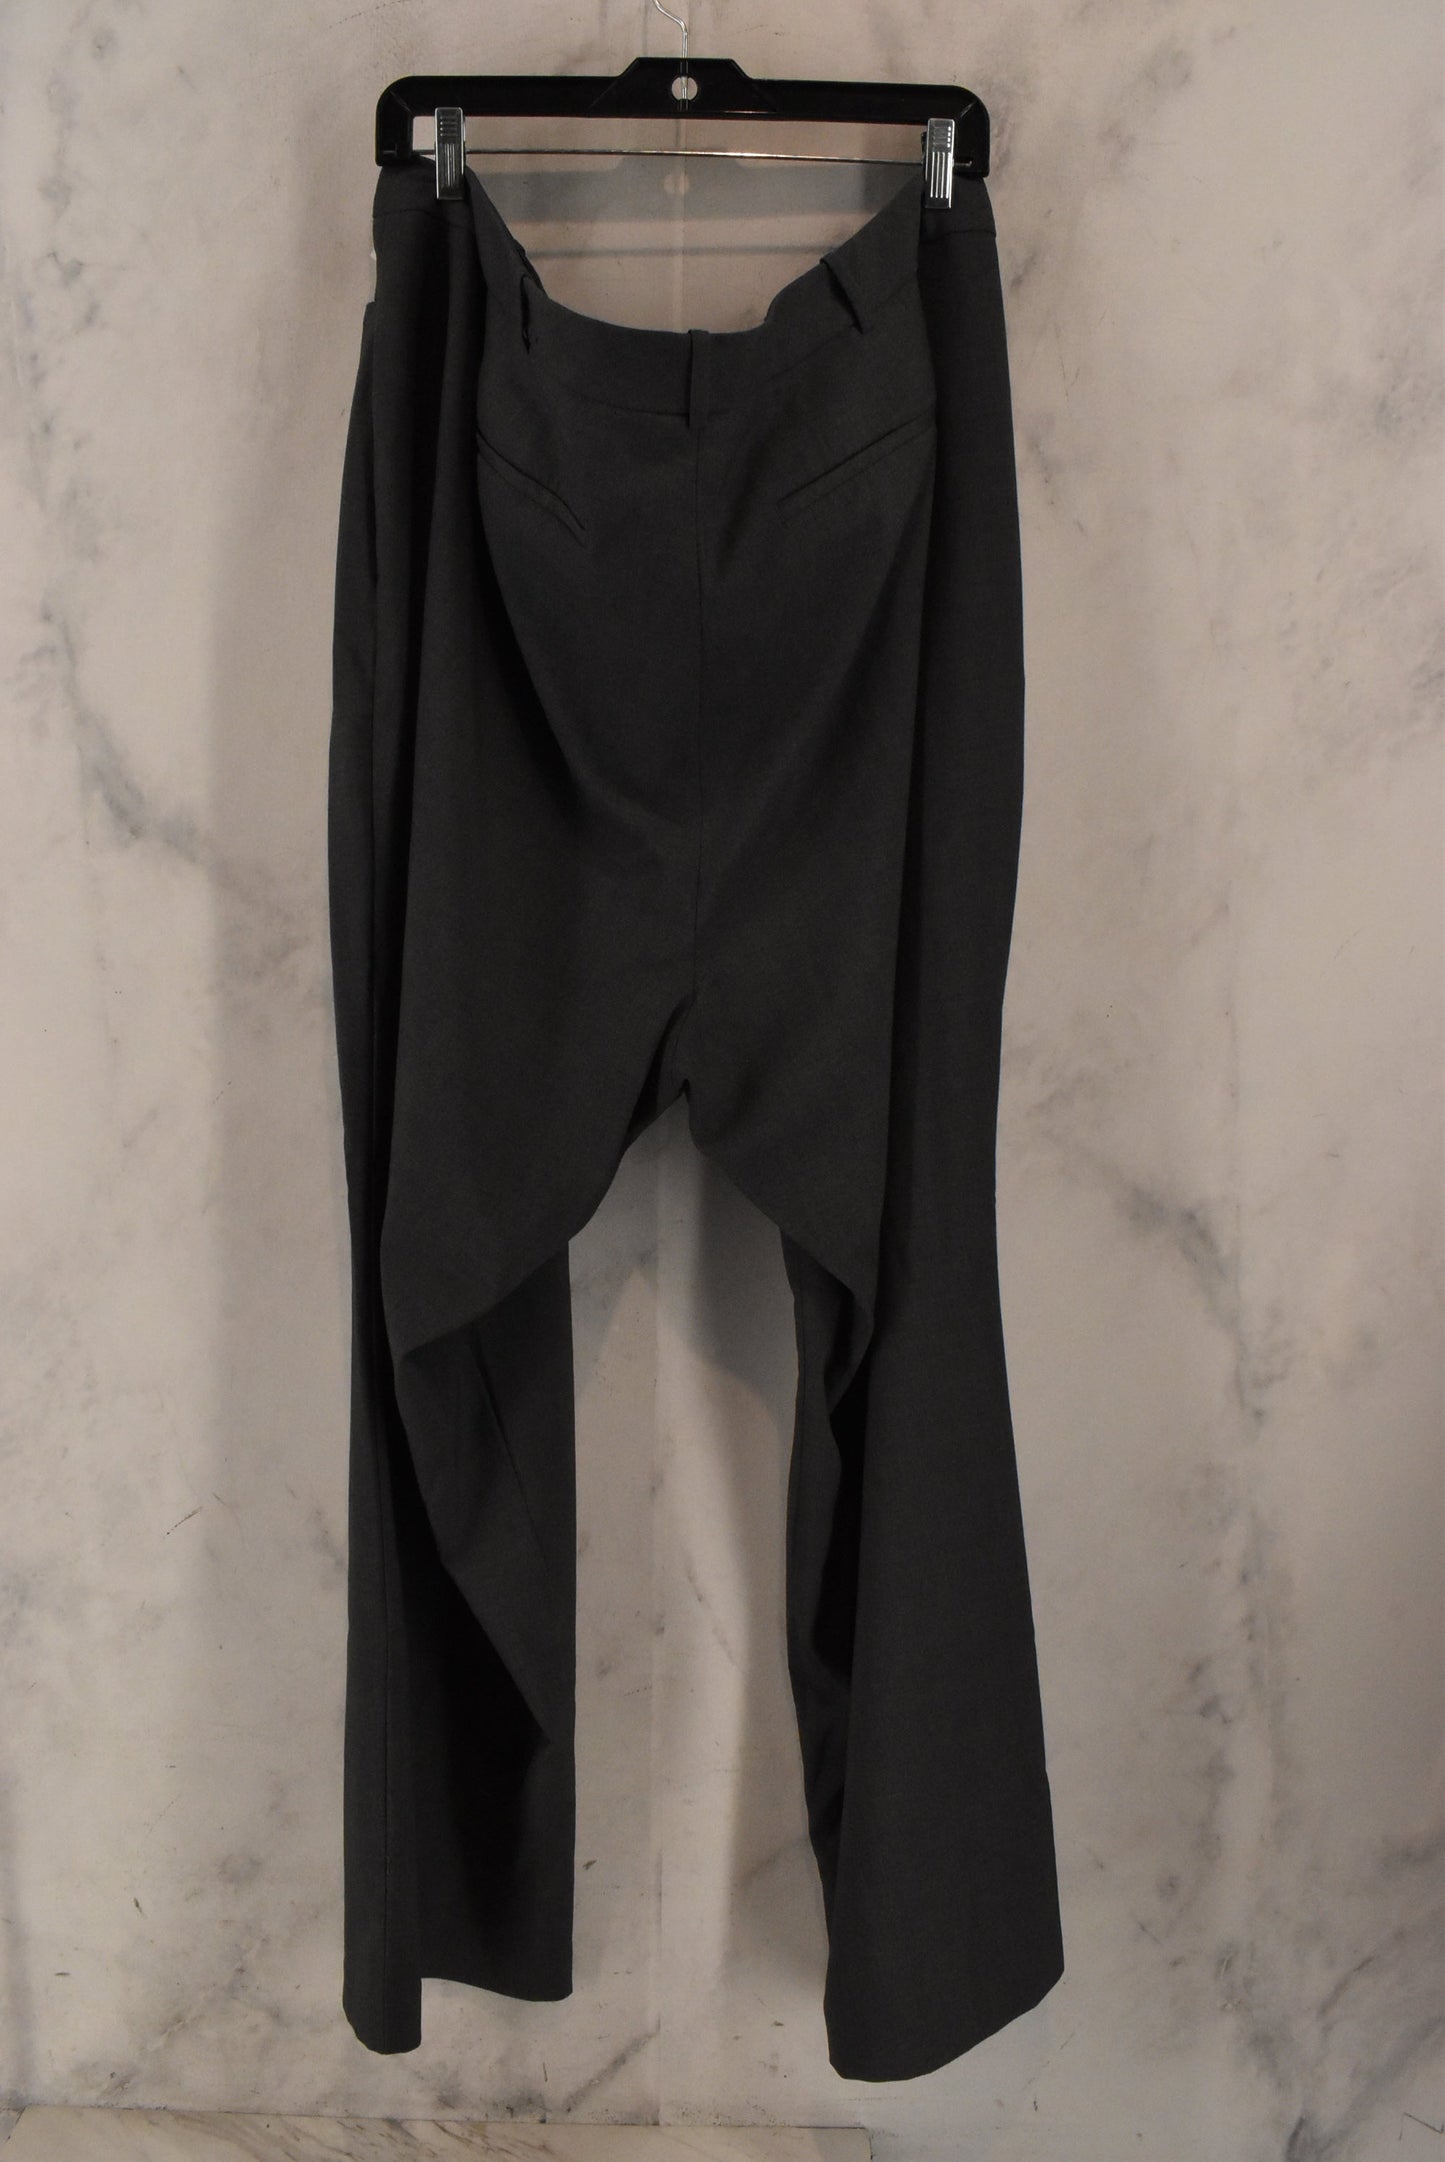 Pants Work/dress By Worthington  Size: 26